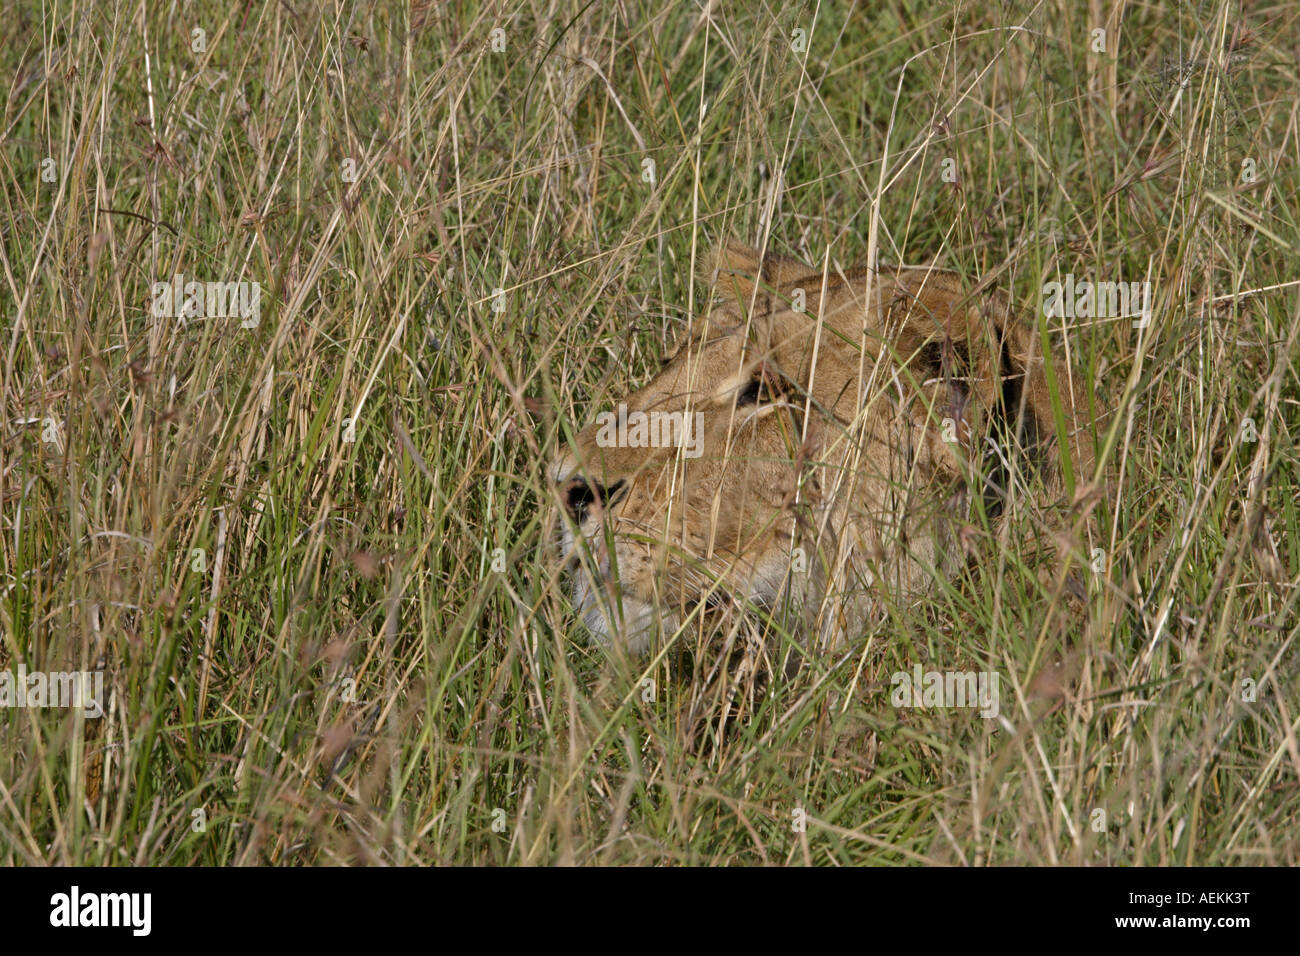 Female Lion Stock Photo